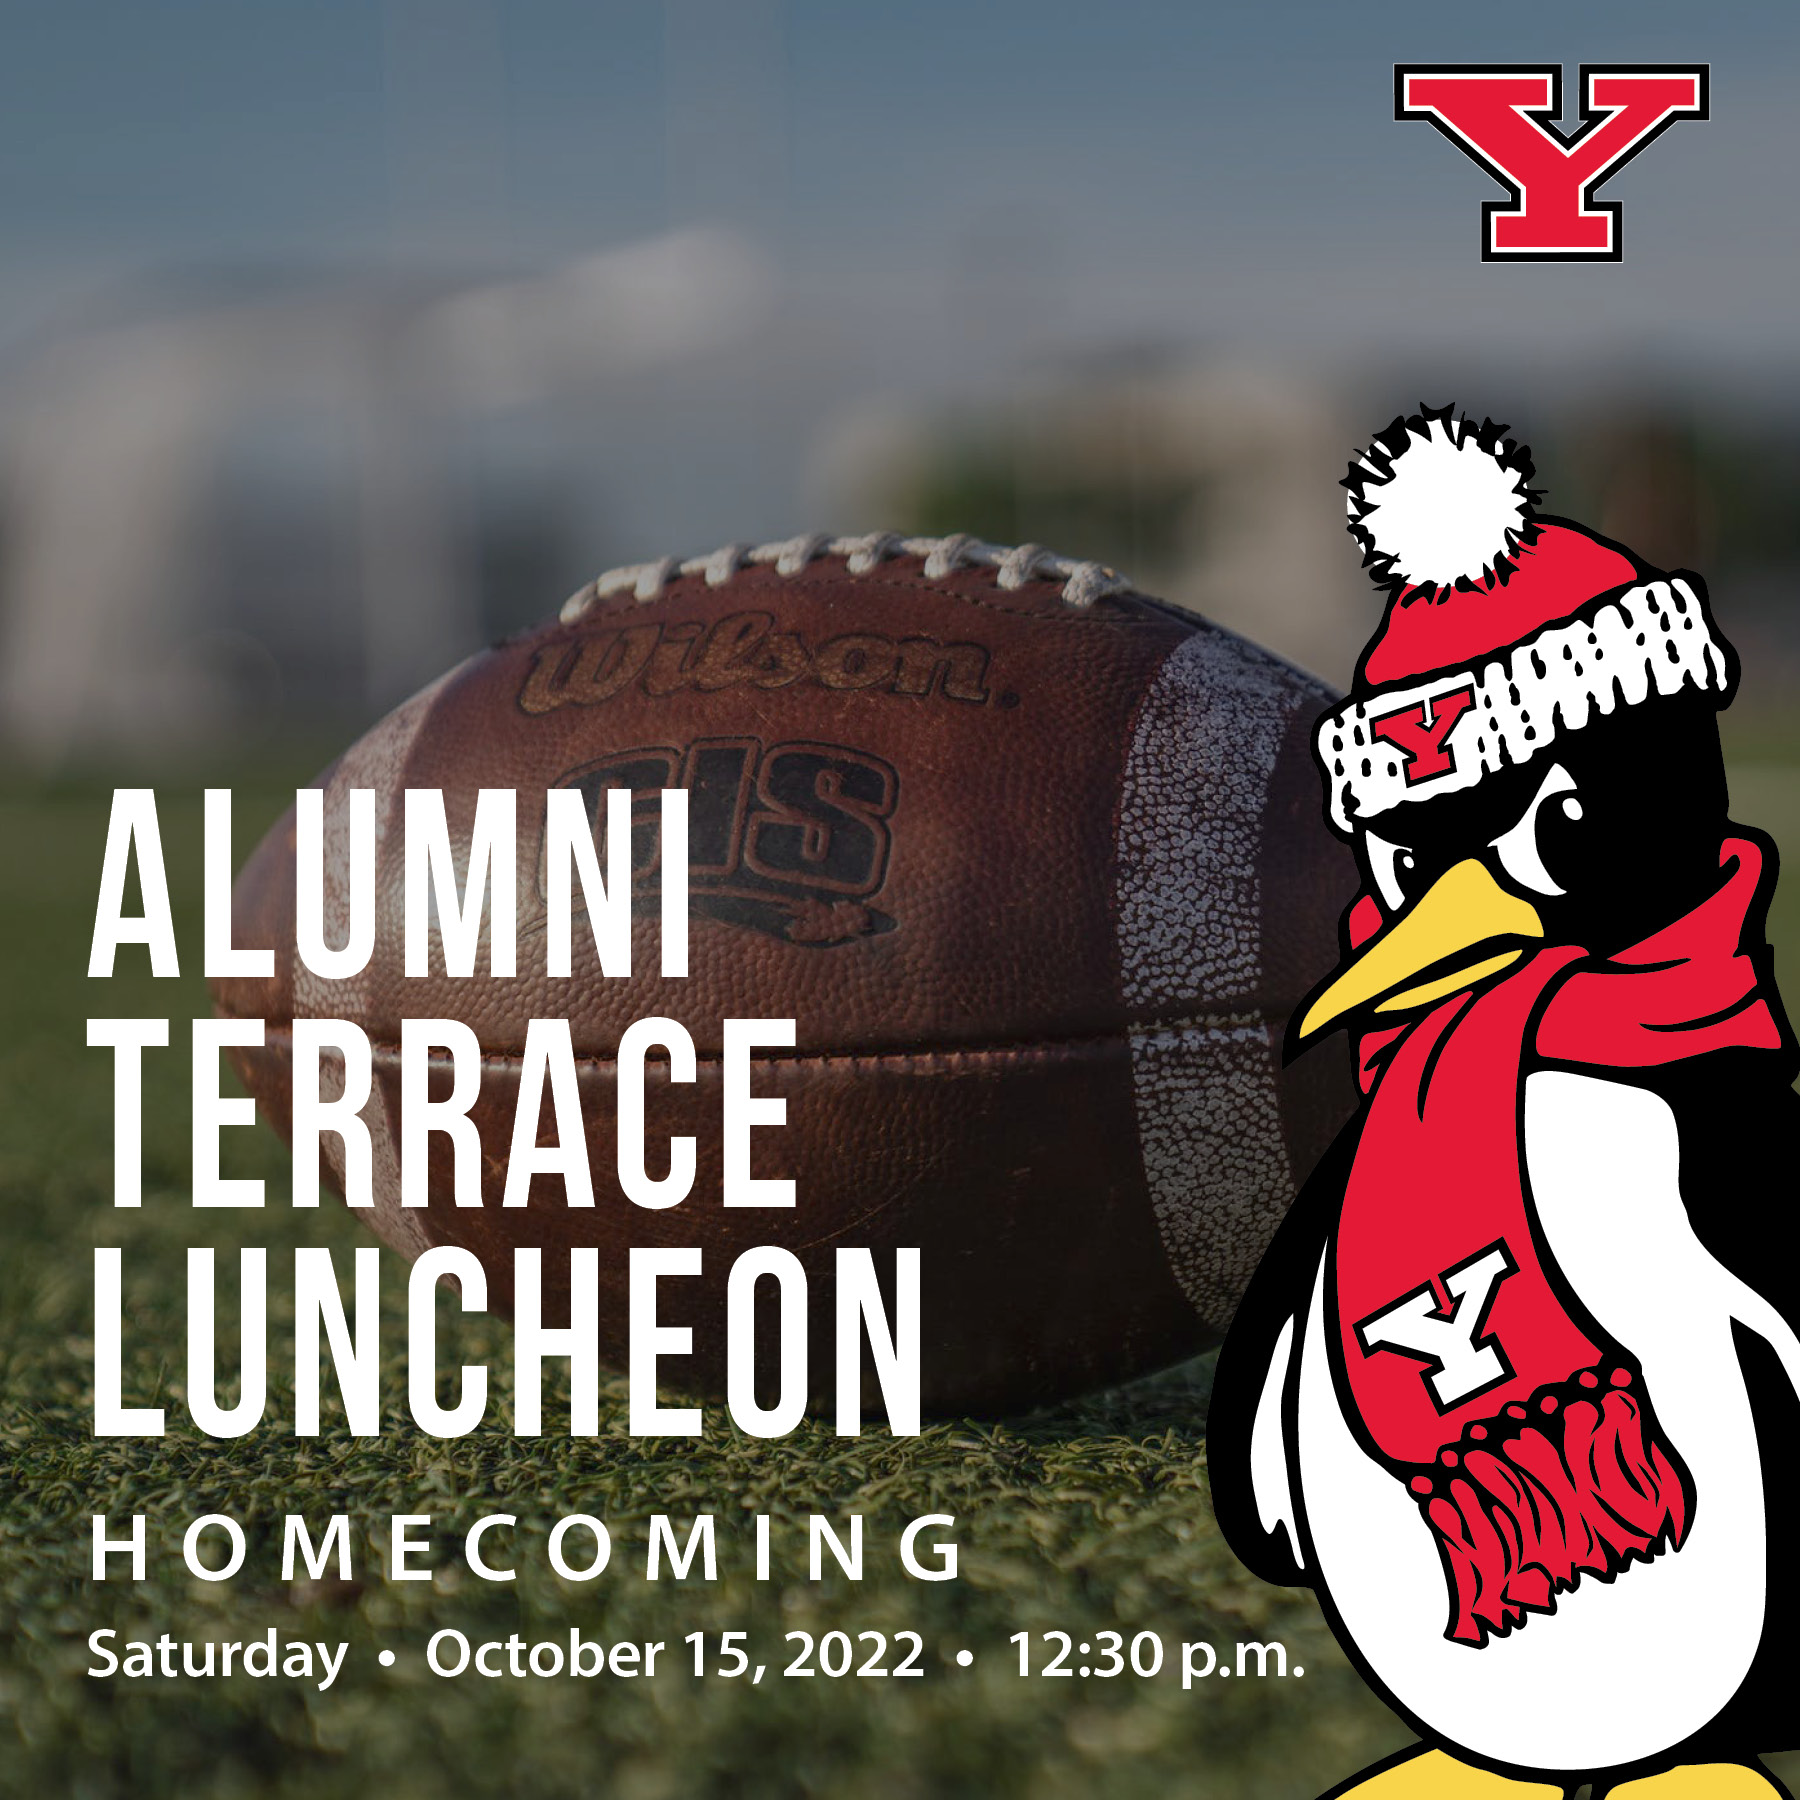 Alumni Terrace Luncheon